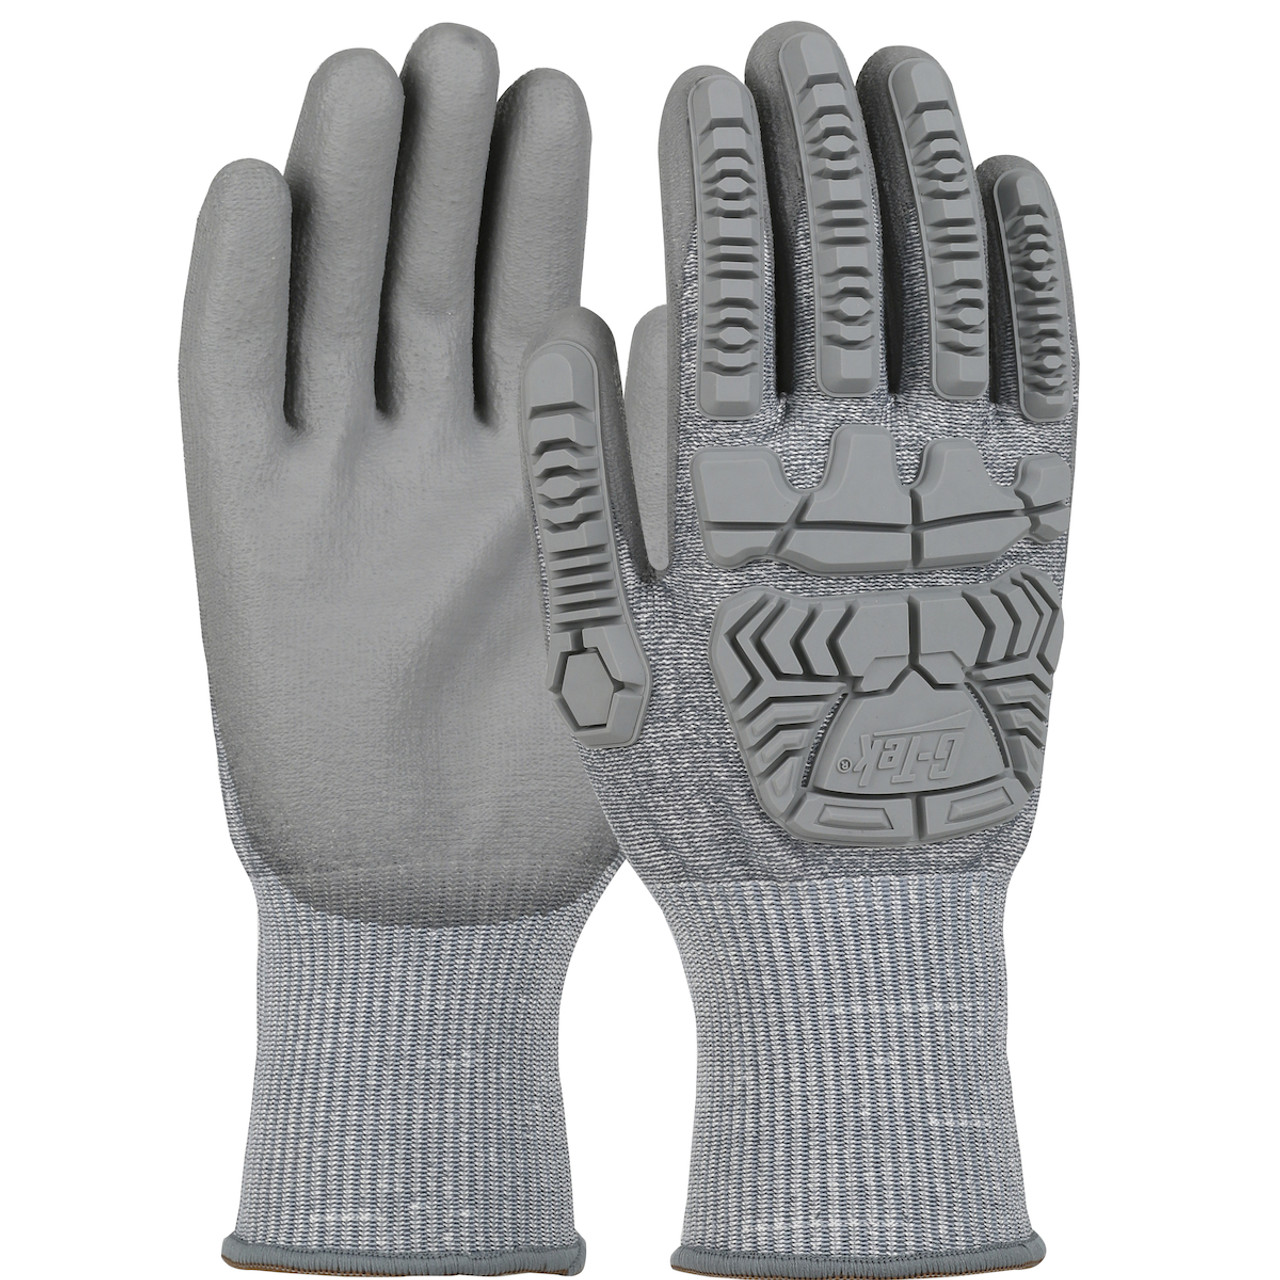 TECHTONGDA Cut Resistant Wear Gloves 1 Pair High Performance HPPE